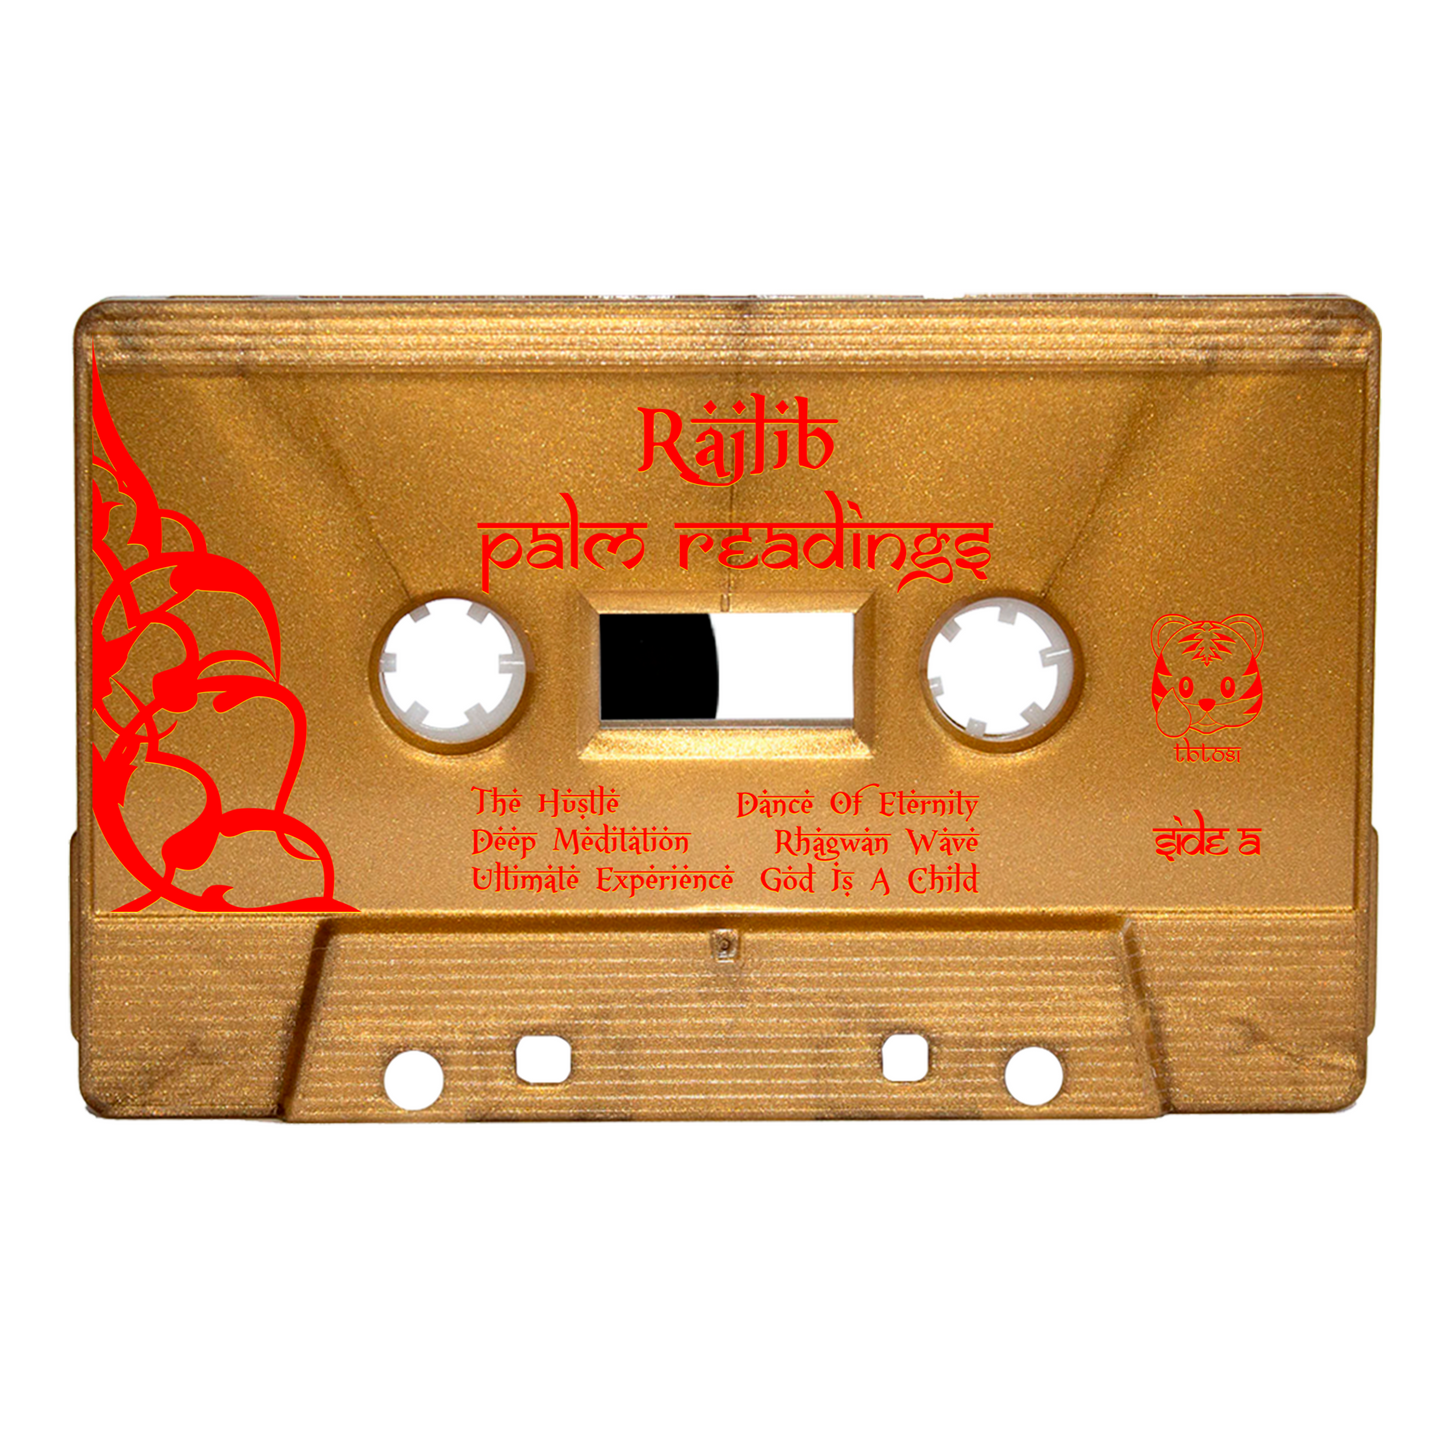 Rajlib - "Palm Readings" Limited Edition Cassette Tape